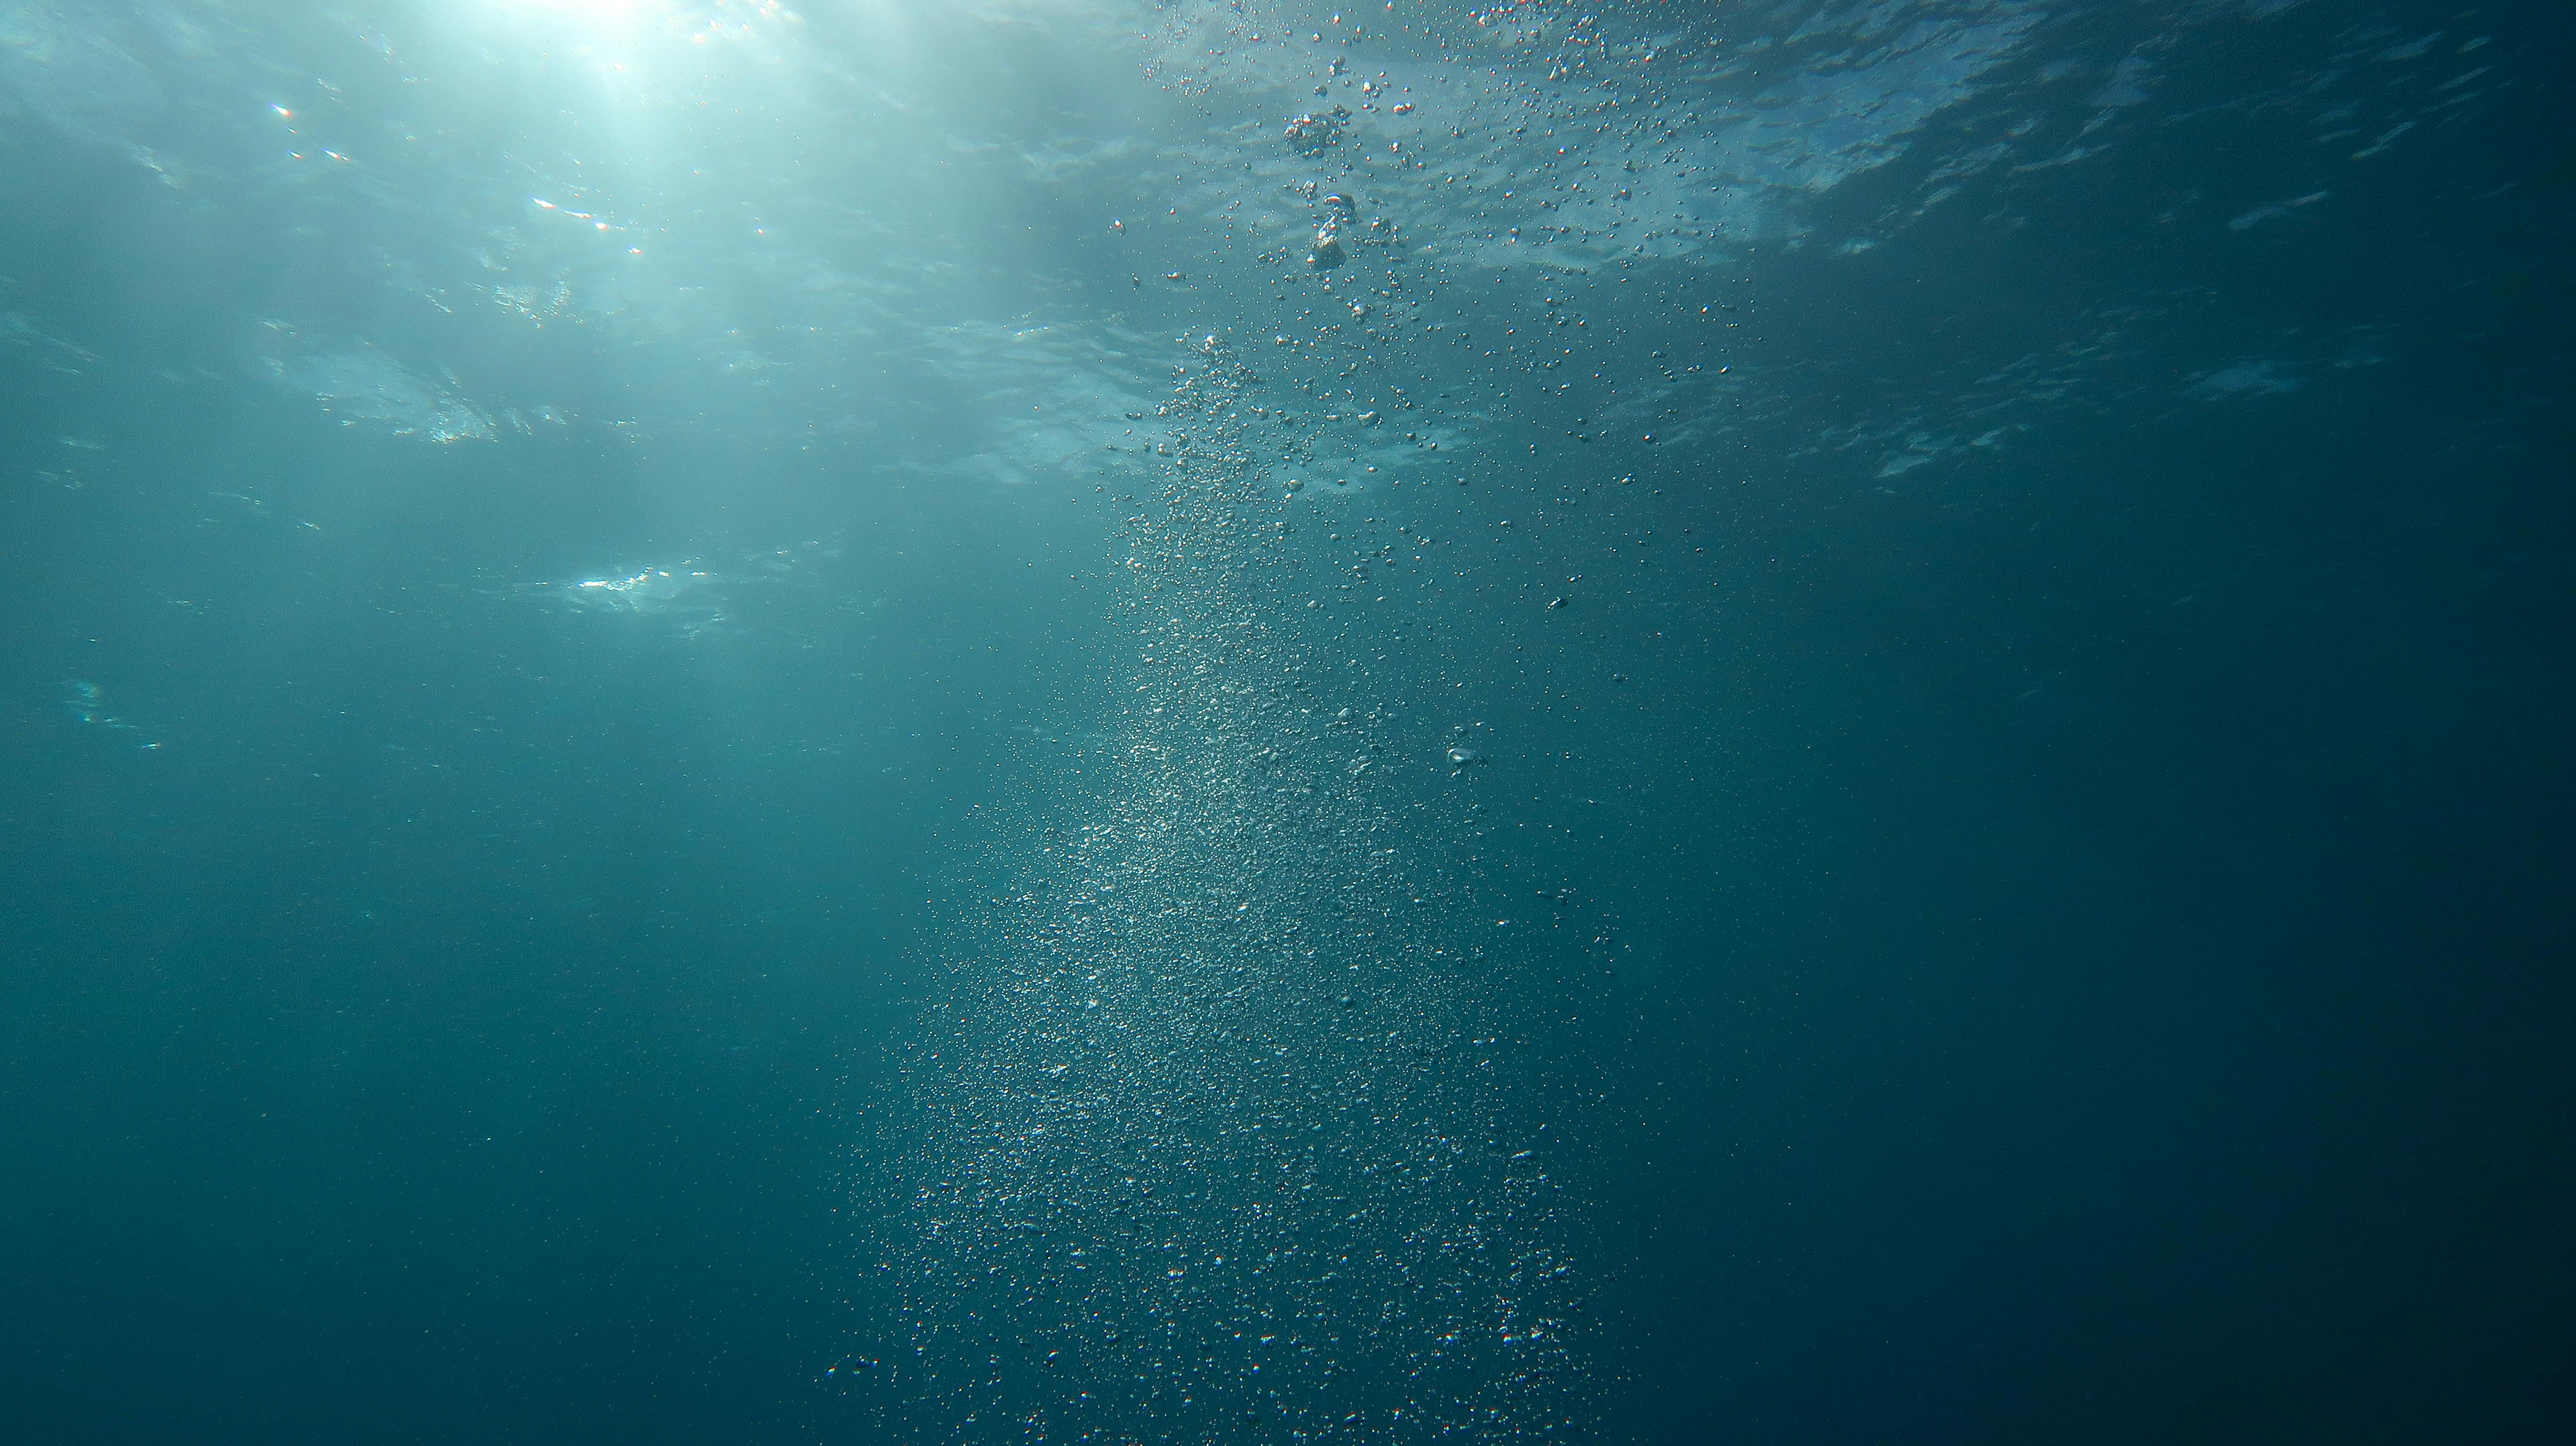 Foto de Berend de Kort: https://www.pexels.com/pt-br/foto/foto-de-bubbles-underwater-1452701/